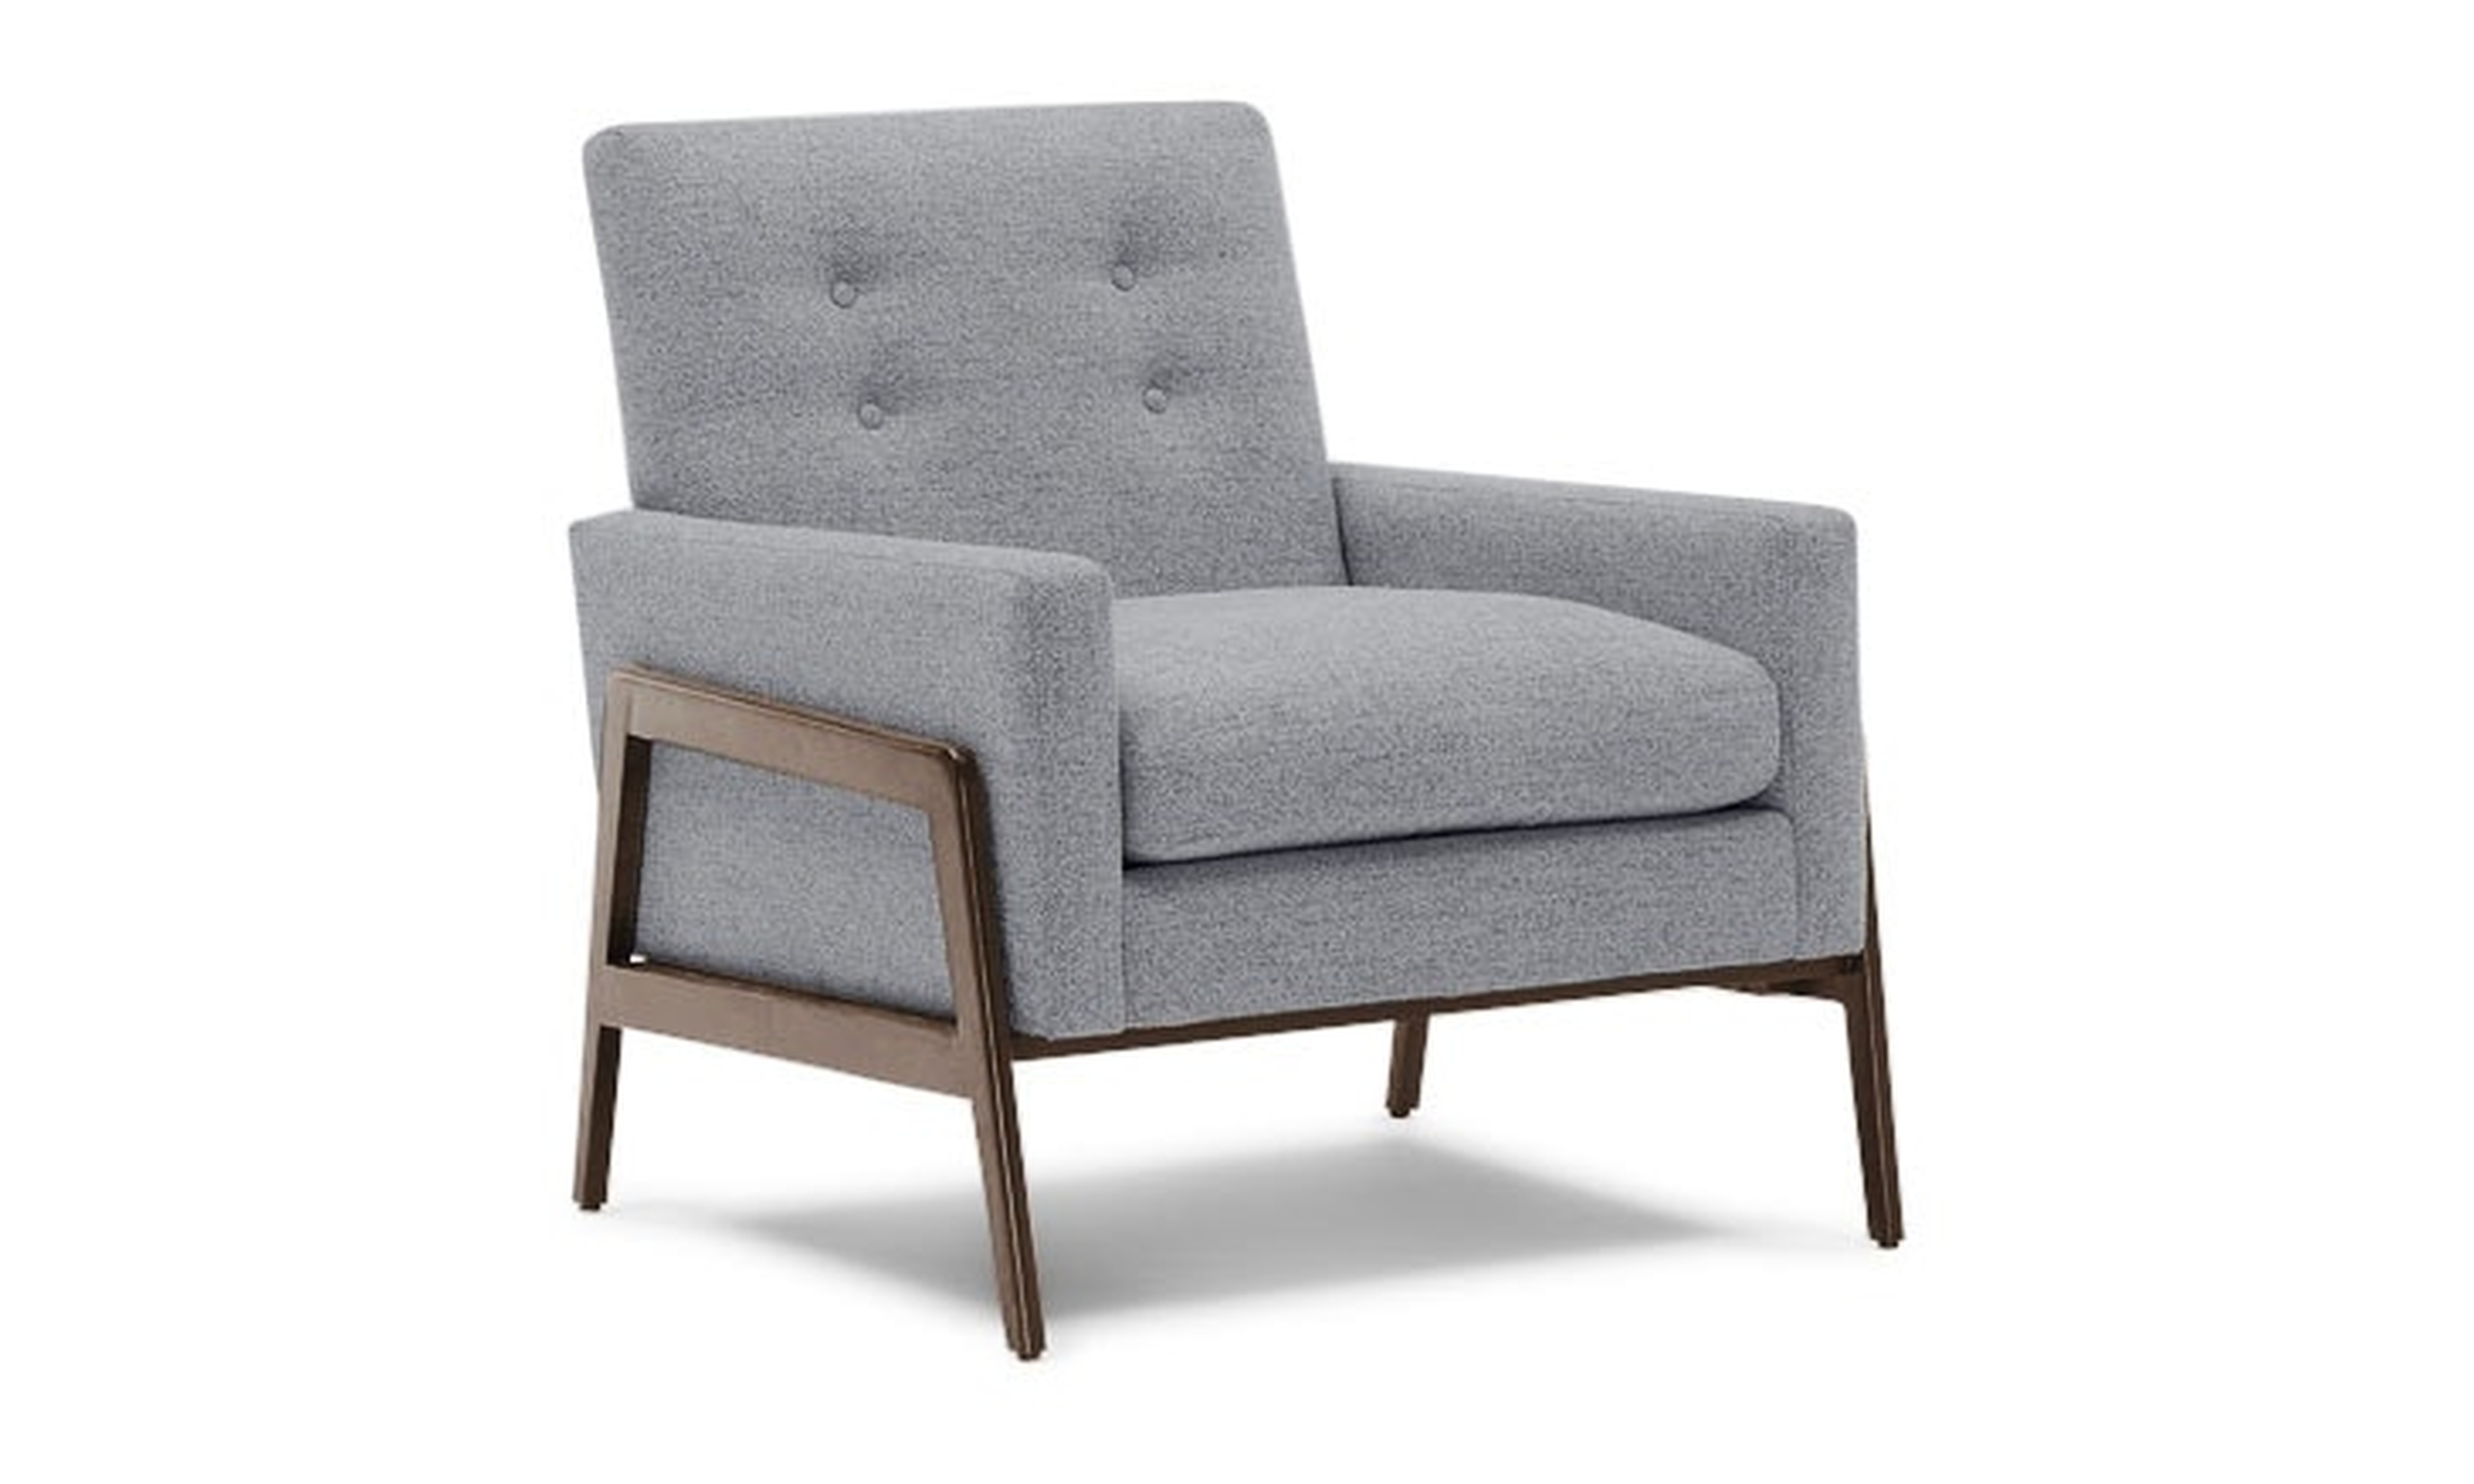 Gray Clyde Mid Century Modern Chair - Essence Ash - Coffee Bean - Joybird